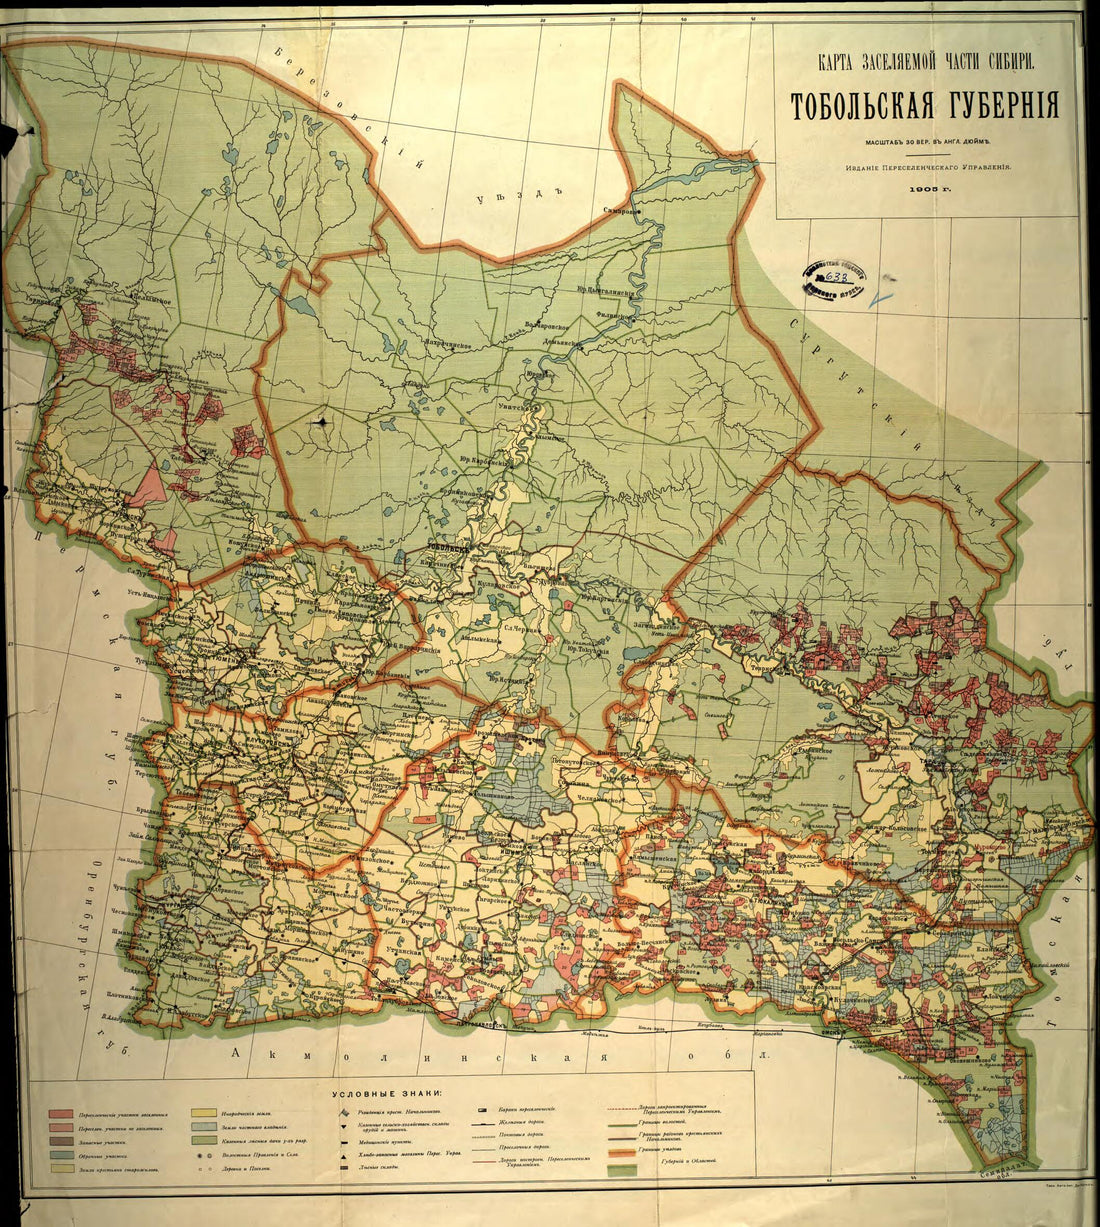 This old map of Karta Zaseli︠a︡emoĭ Chasti Sibiri. Tobol&